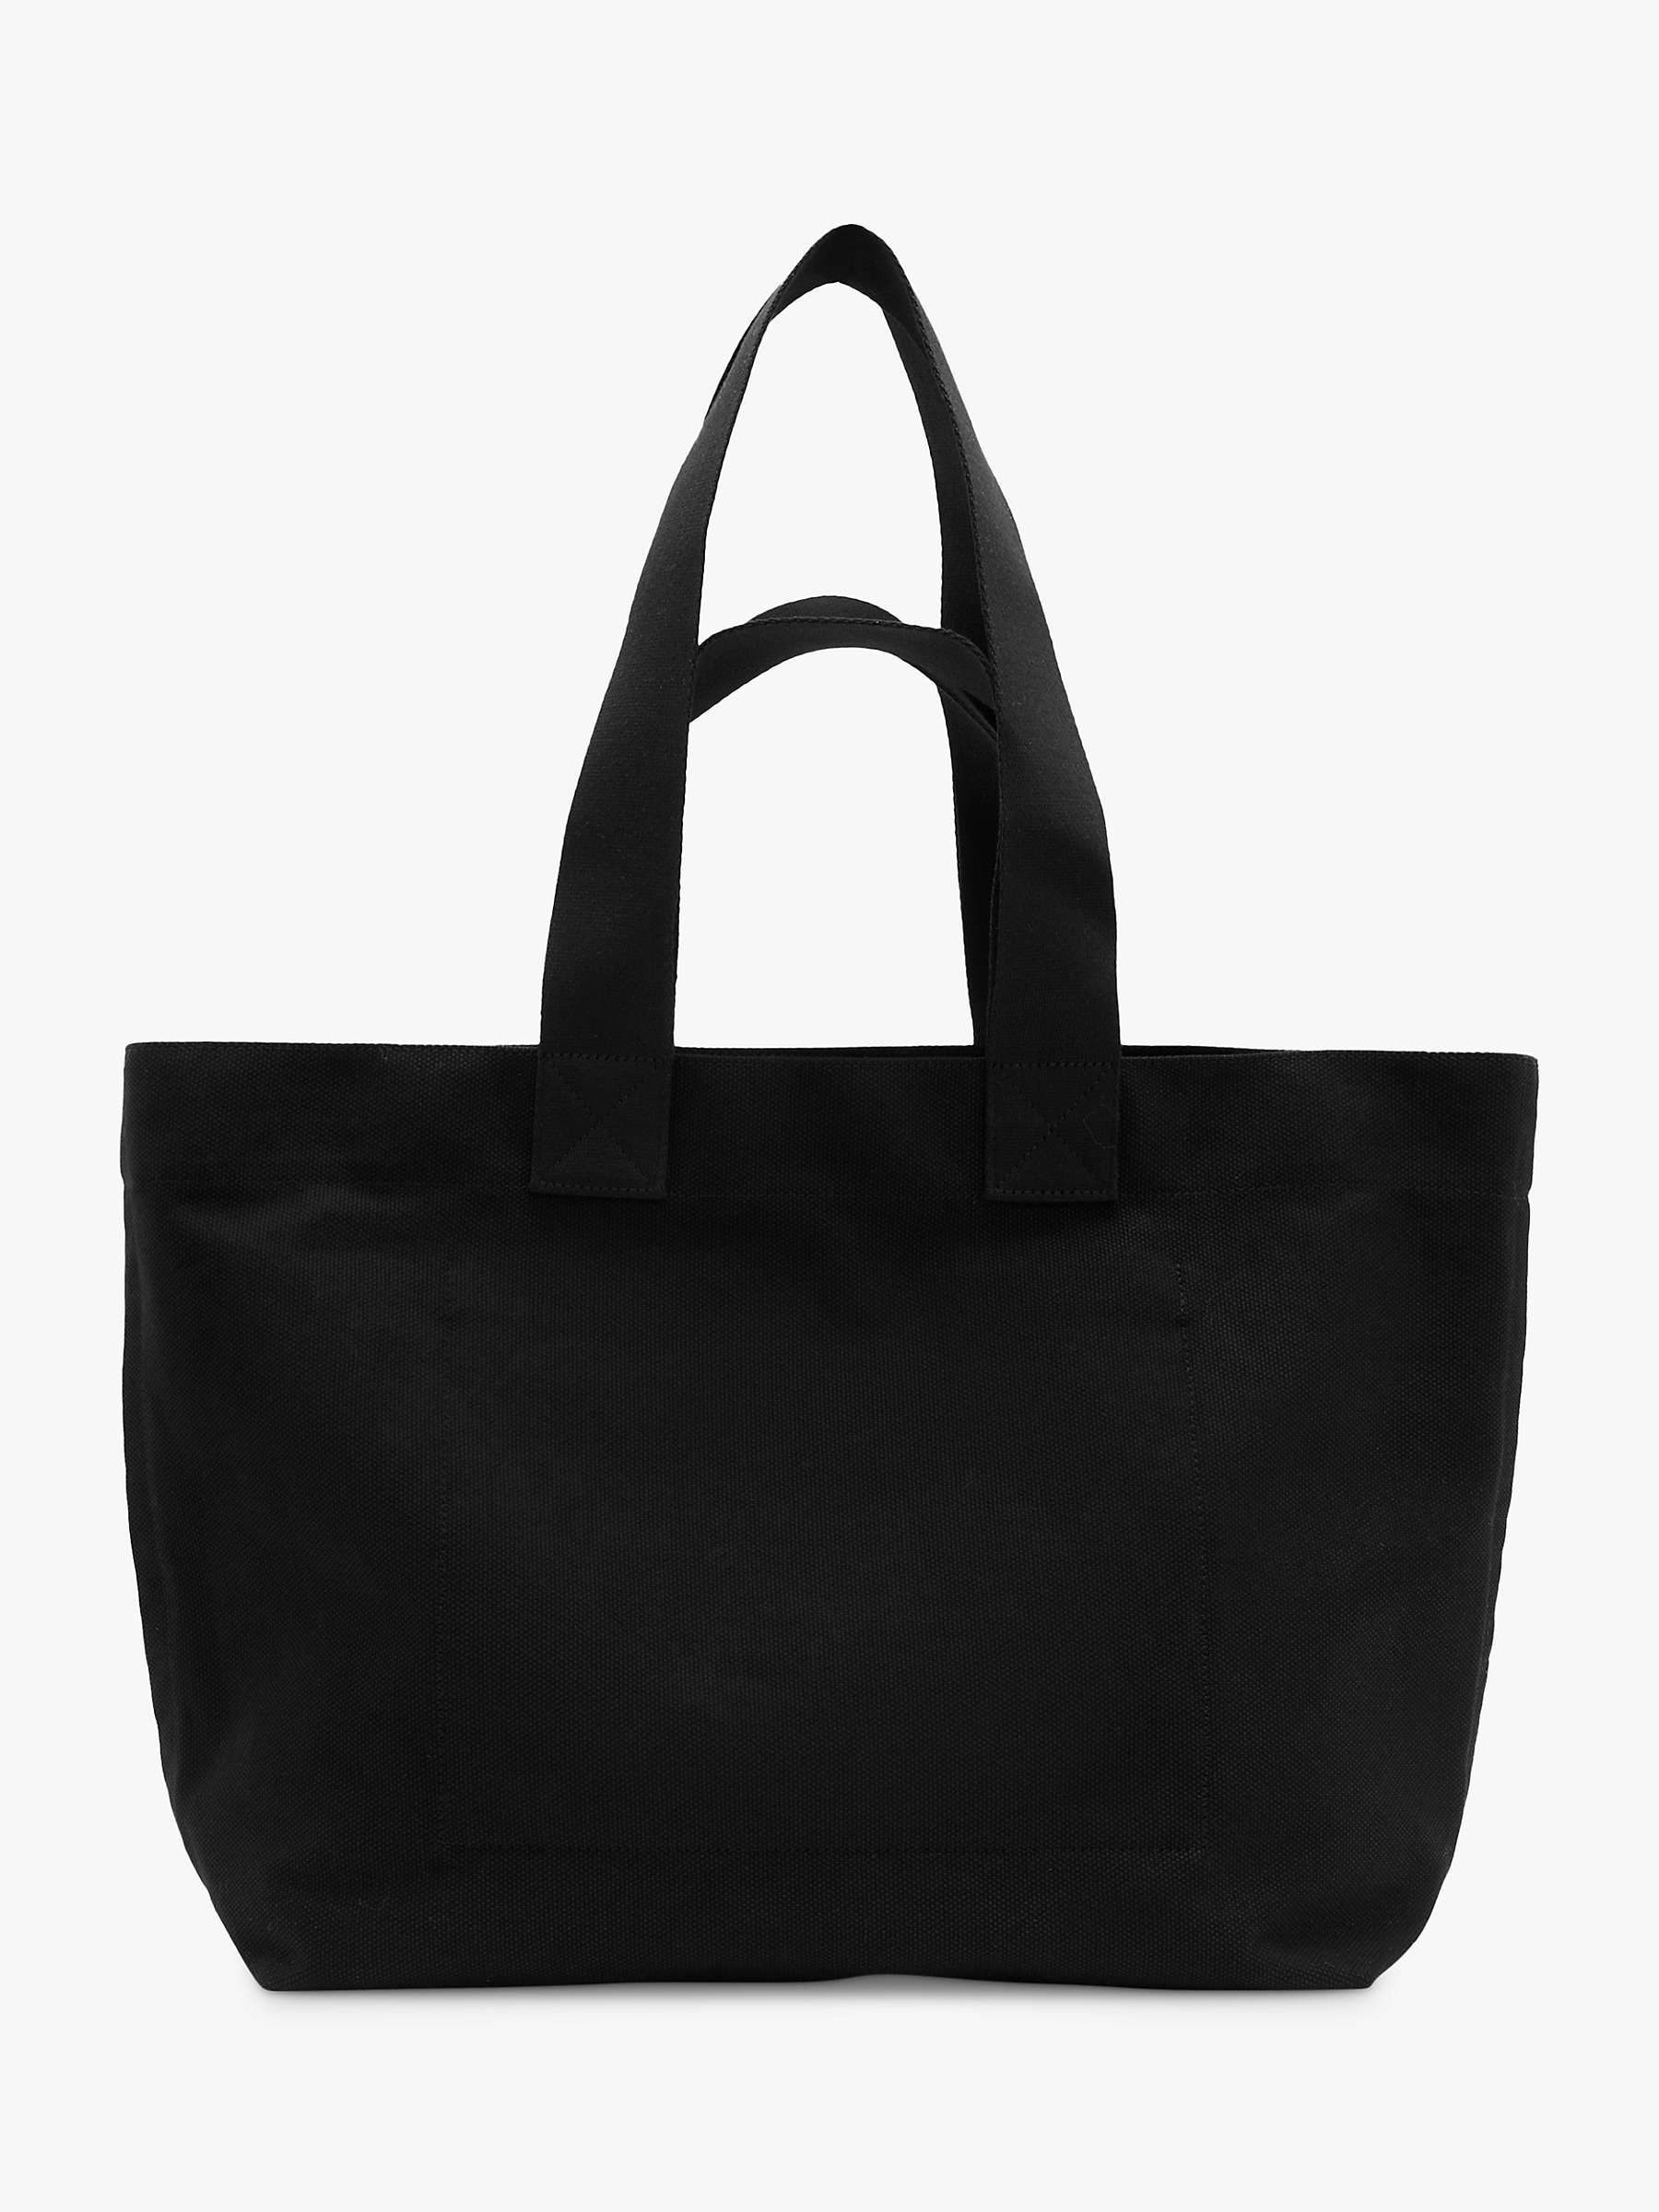 Buy AllSaints Ali East/West Canvas Tote Bag, Black Online at johnlewis.com